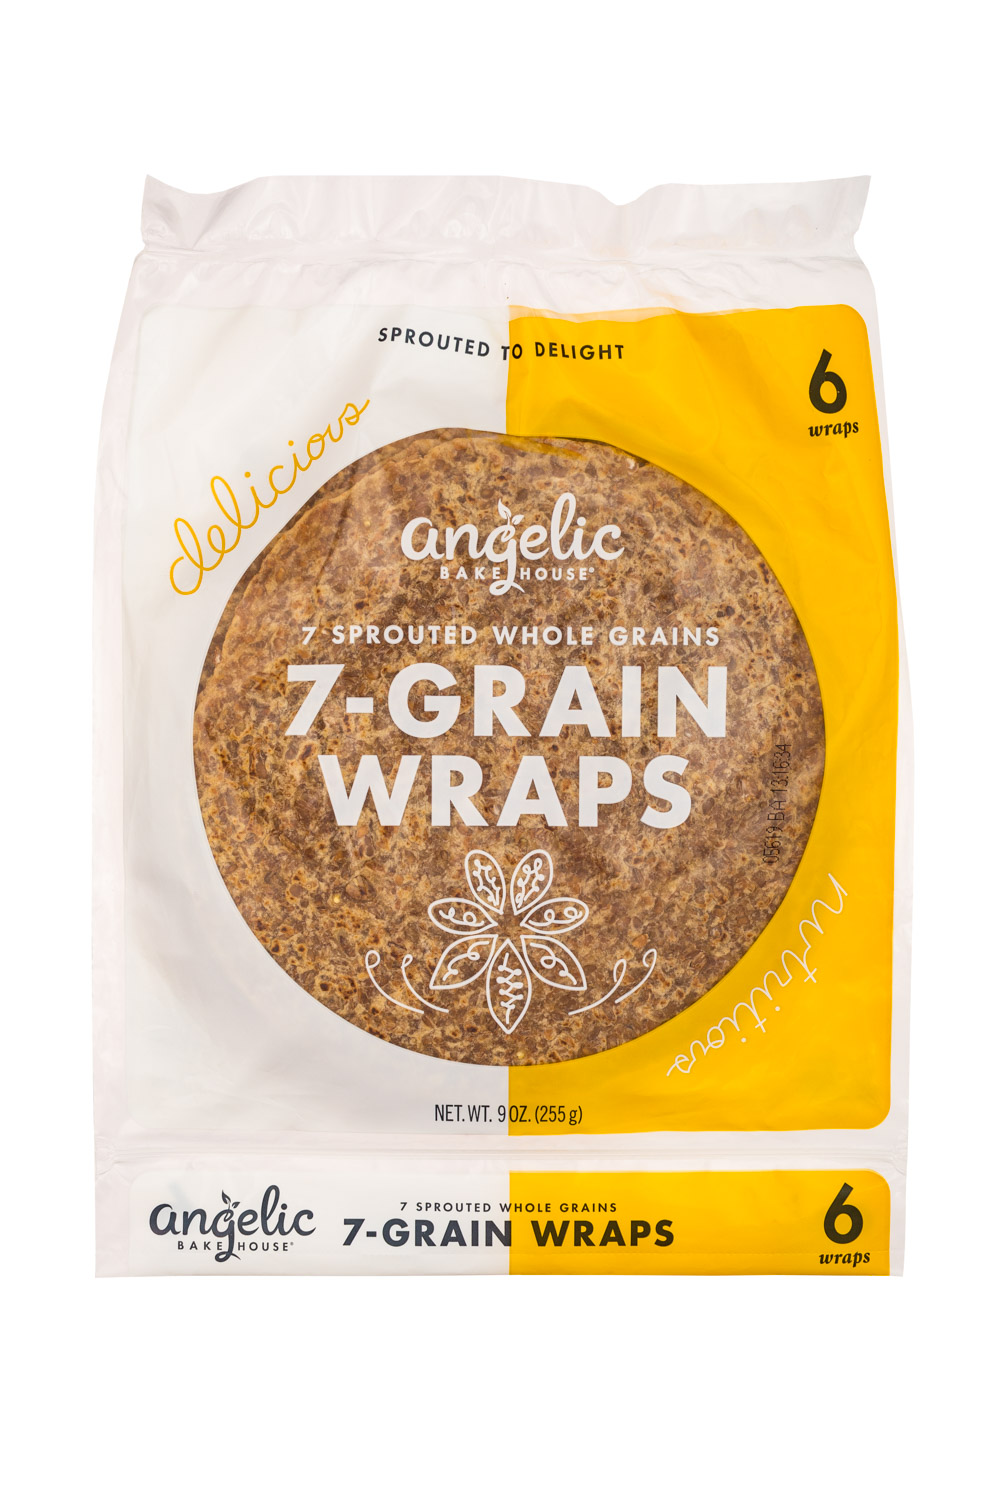 7 - Grain Wraps